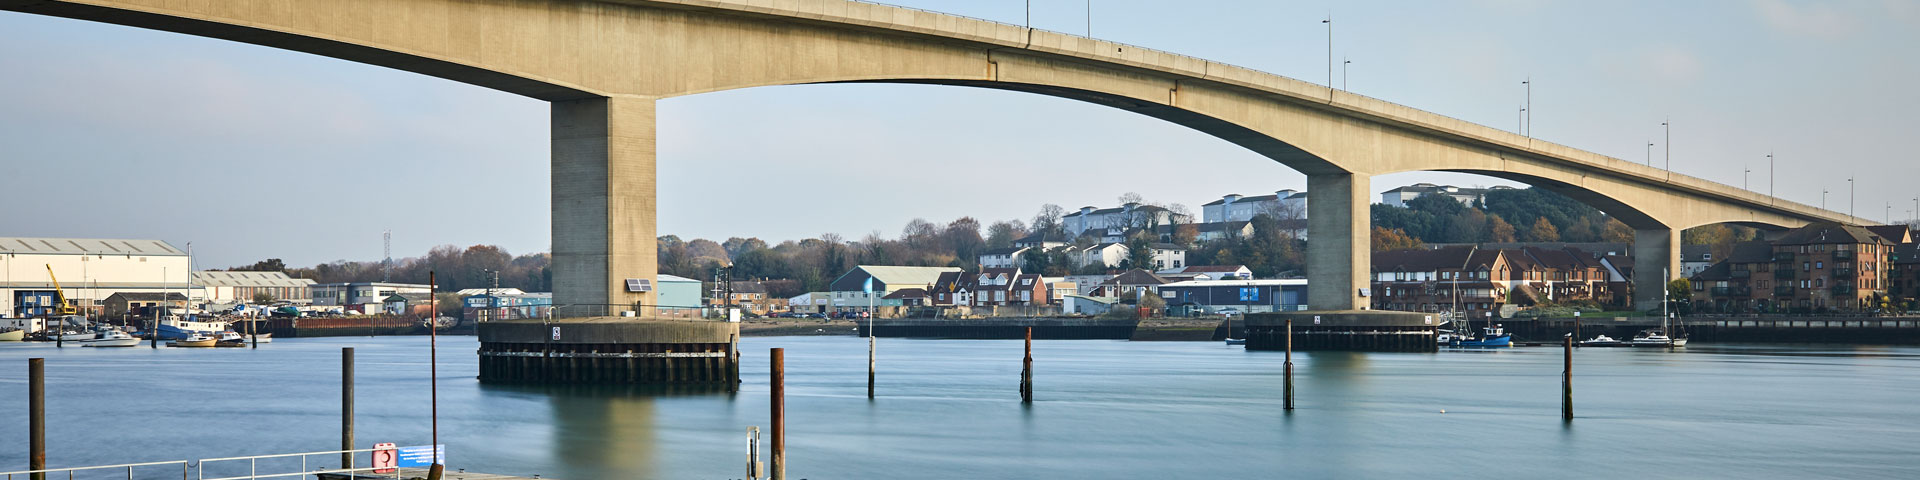 A view of the Itchen Bridge in Southampton